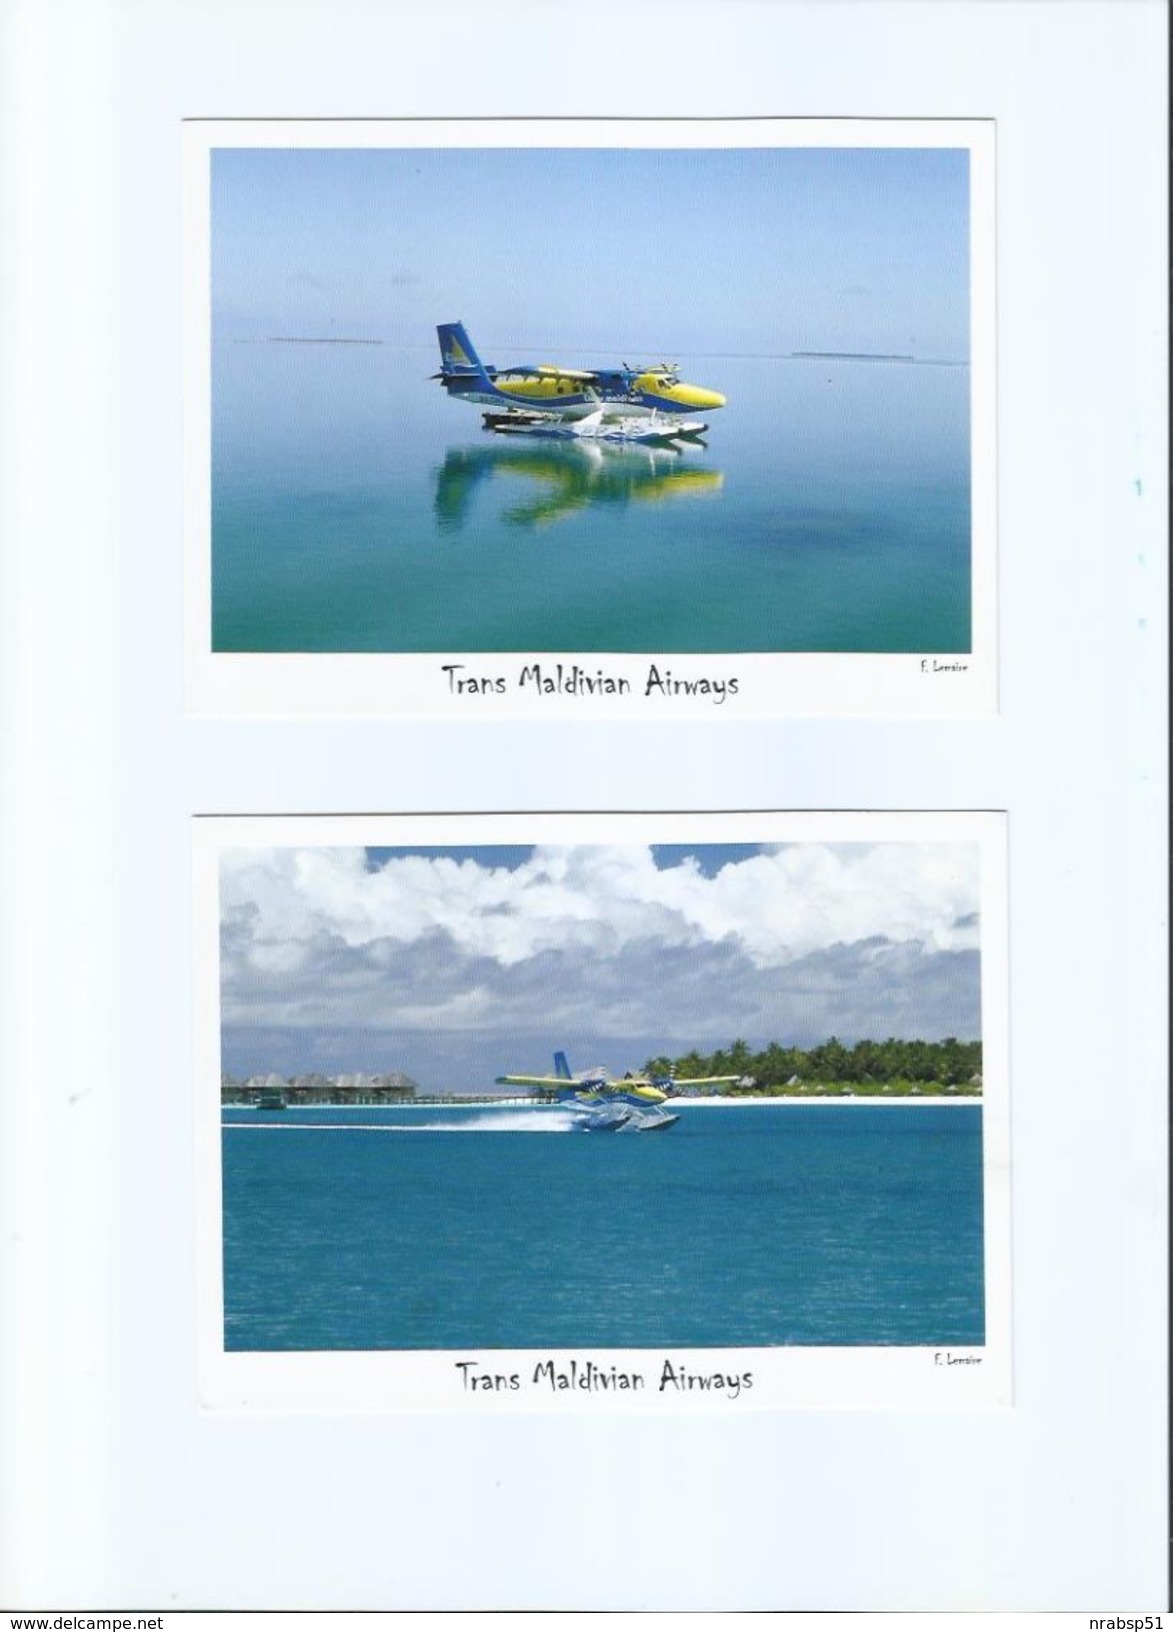 MALDIVES - ASIA - TRANS MALDIVIAN AIRWAYS - AIRPLANES - 2 POSTCARDS - Maldive